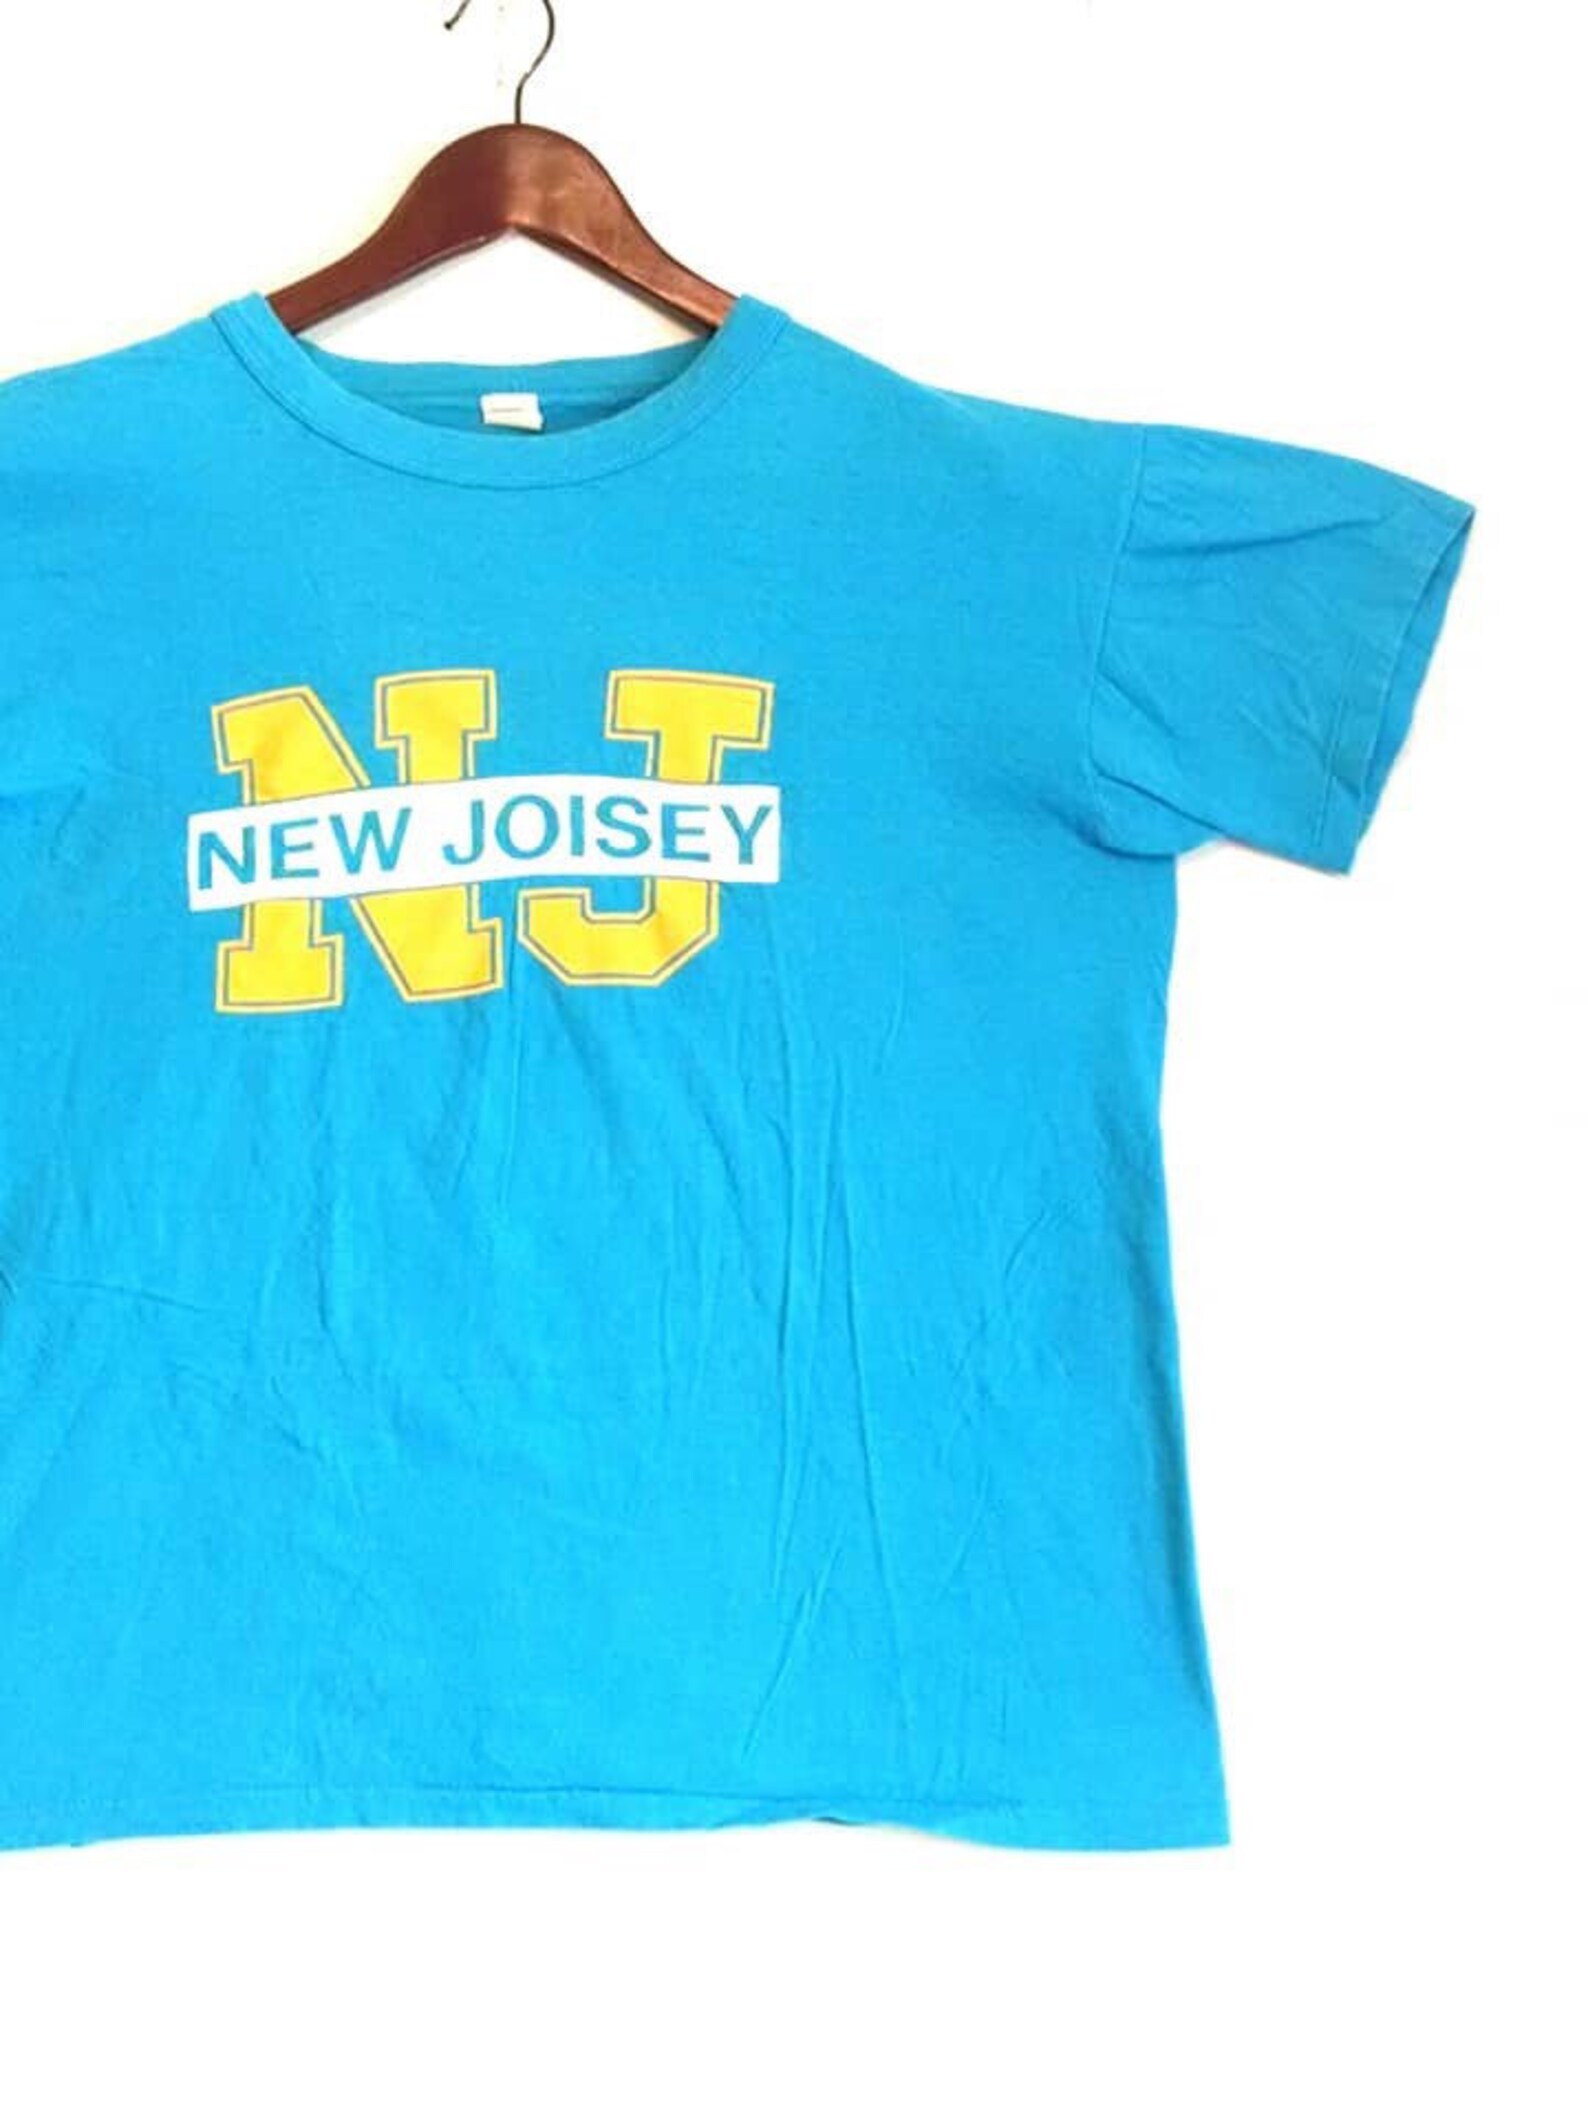 Vintage New Joisey Jersey Shore Souvenir T-shirt - Etsy